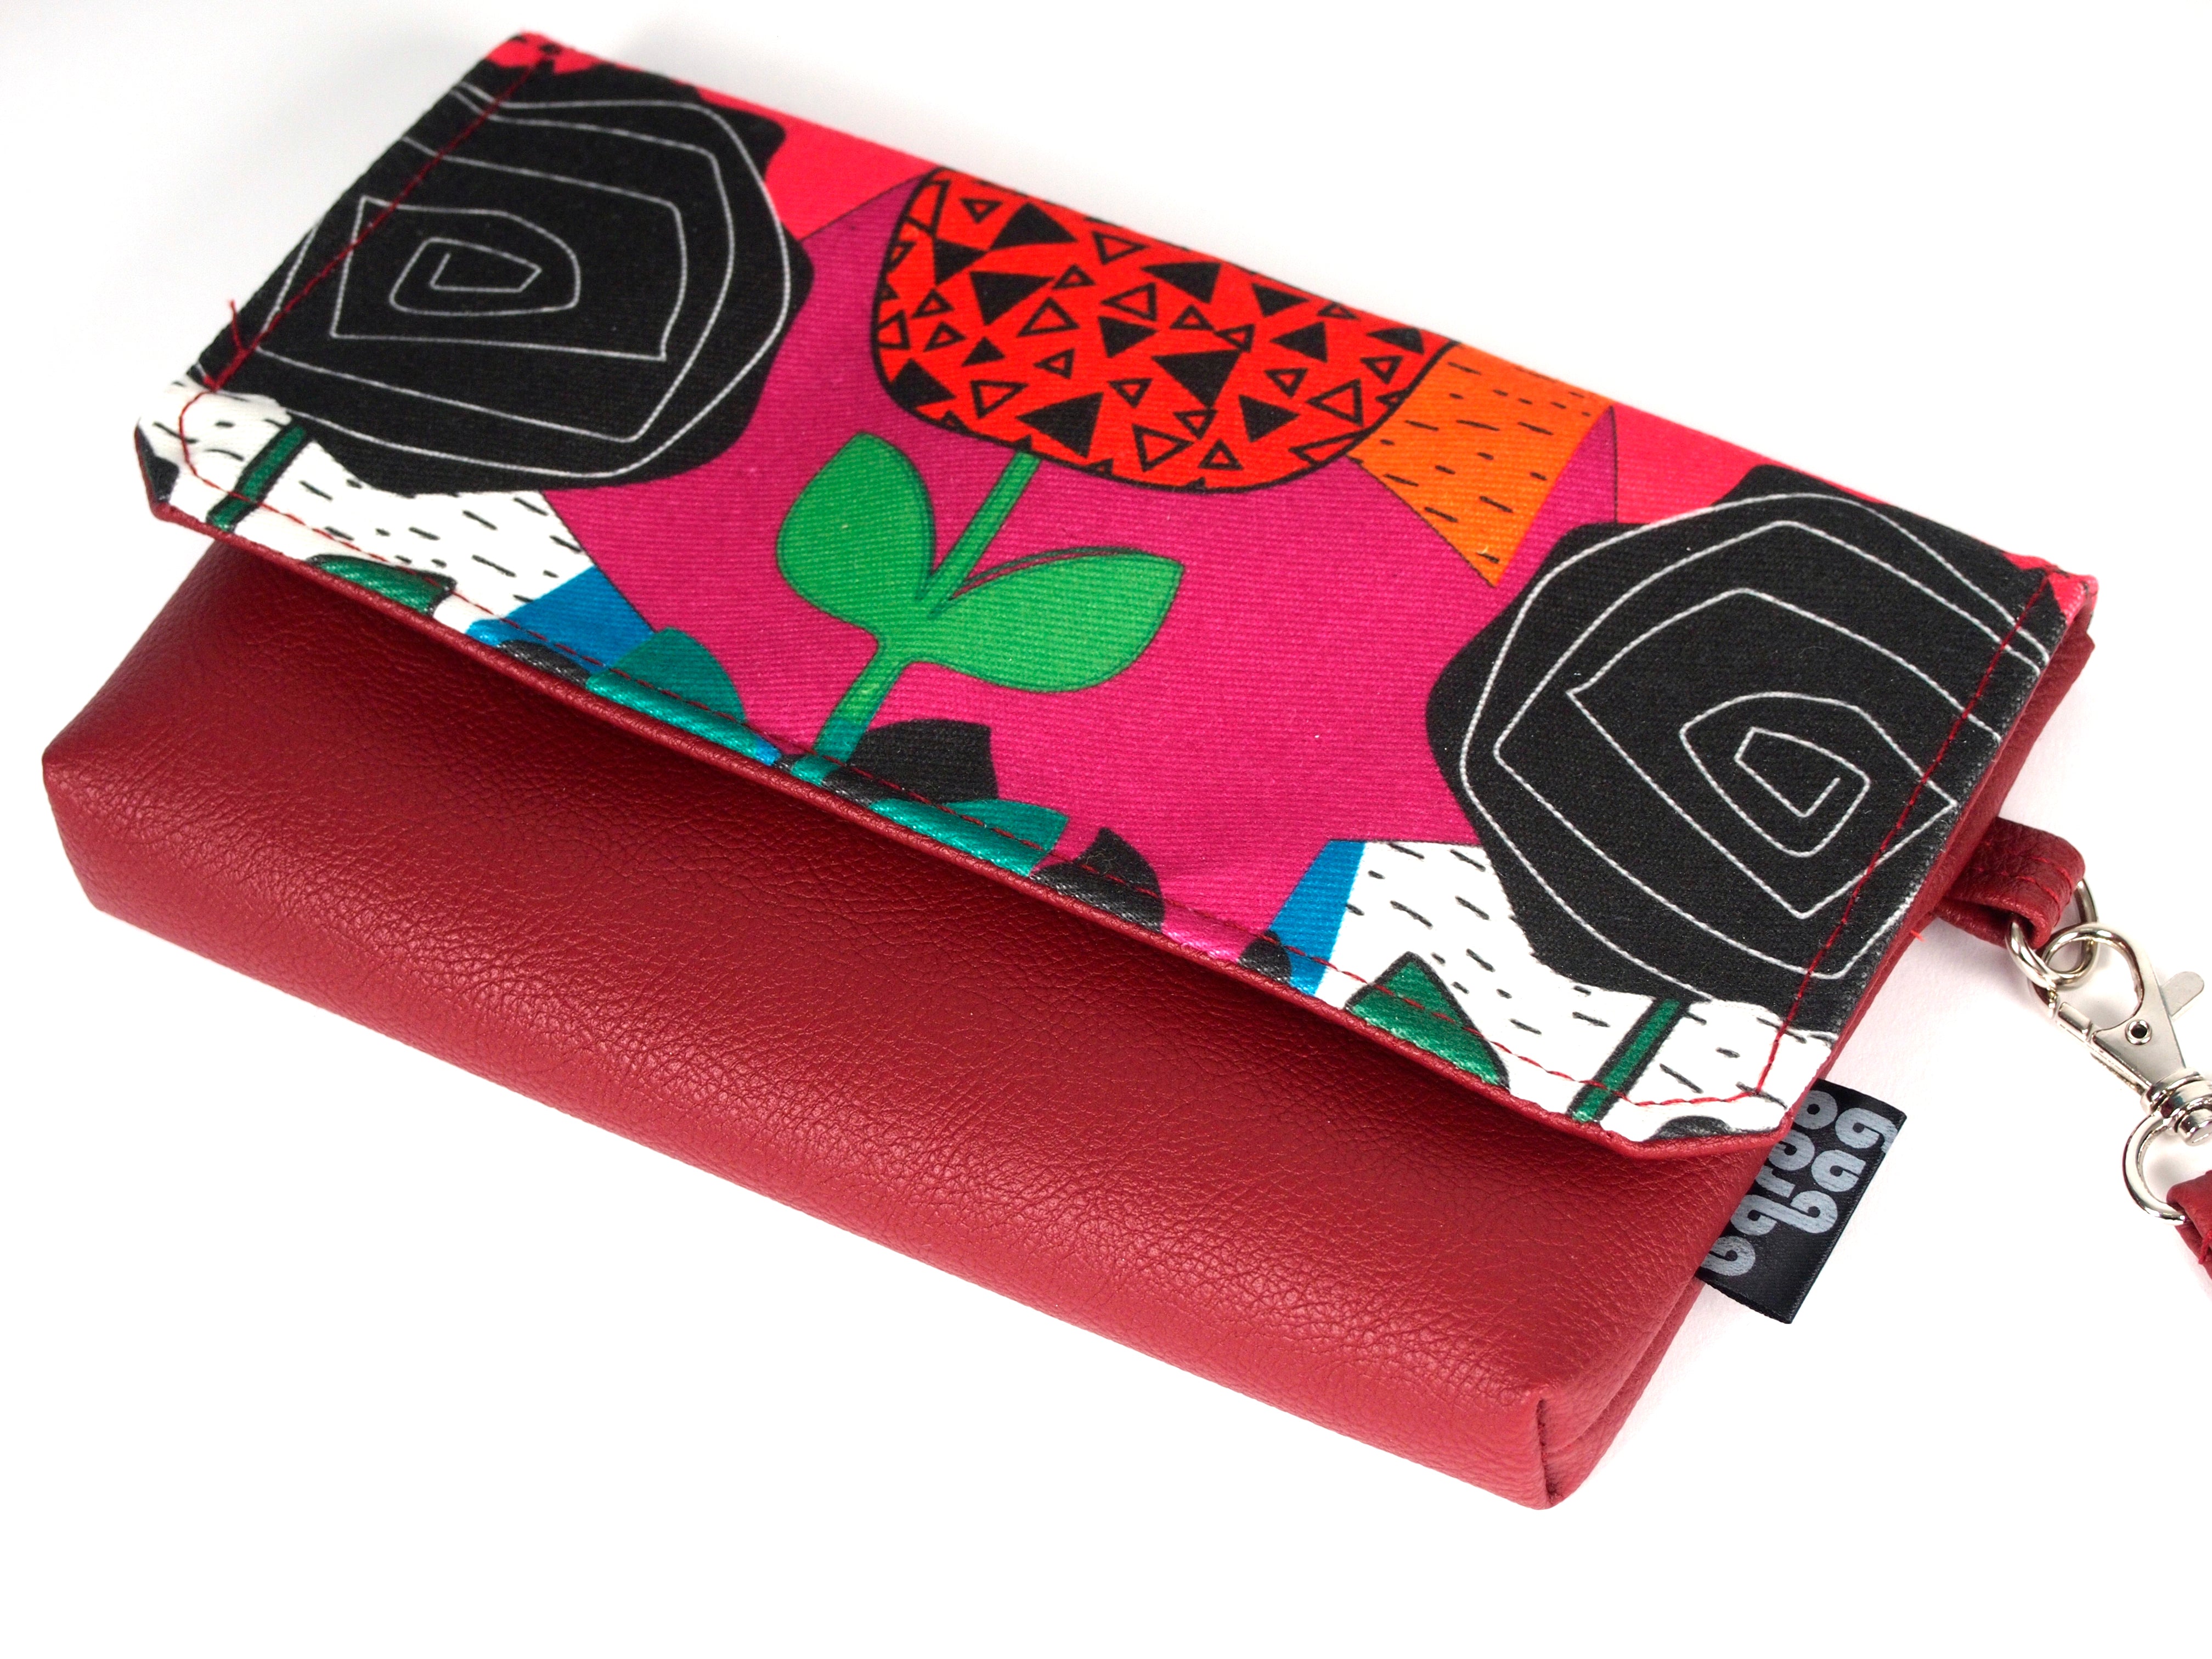 Bardo wallet – Colorful emotion - Premium wallet from BARDO ART WORKS - Just lv42.00! Shop now at BARDO ART WORKS